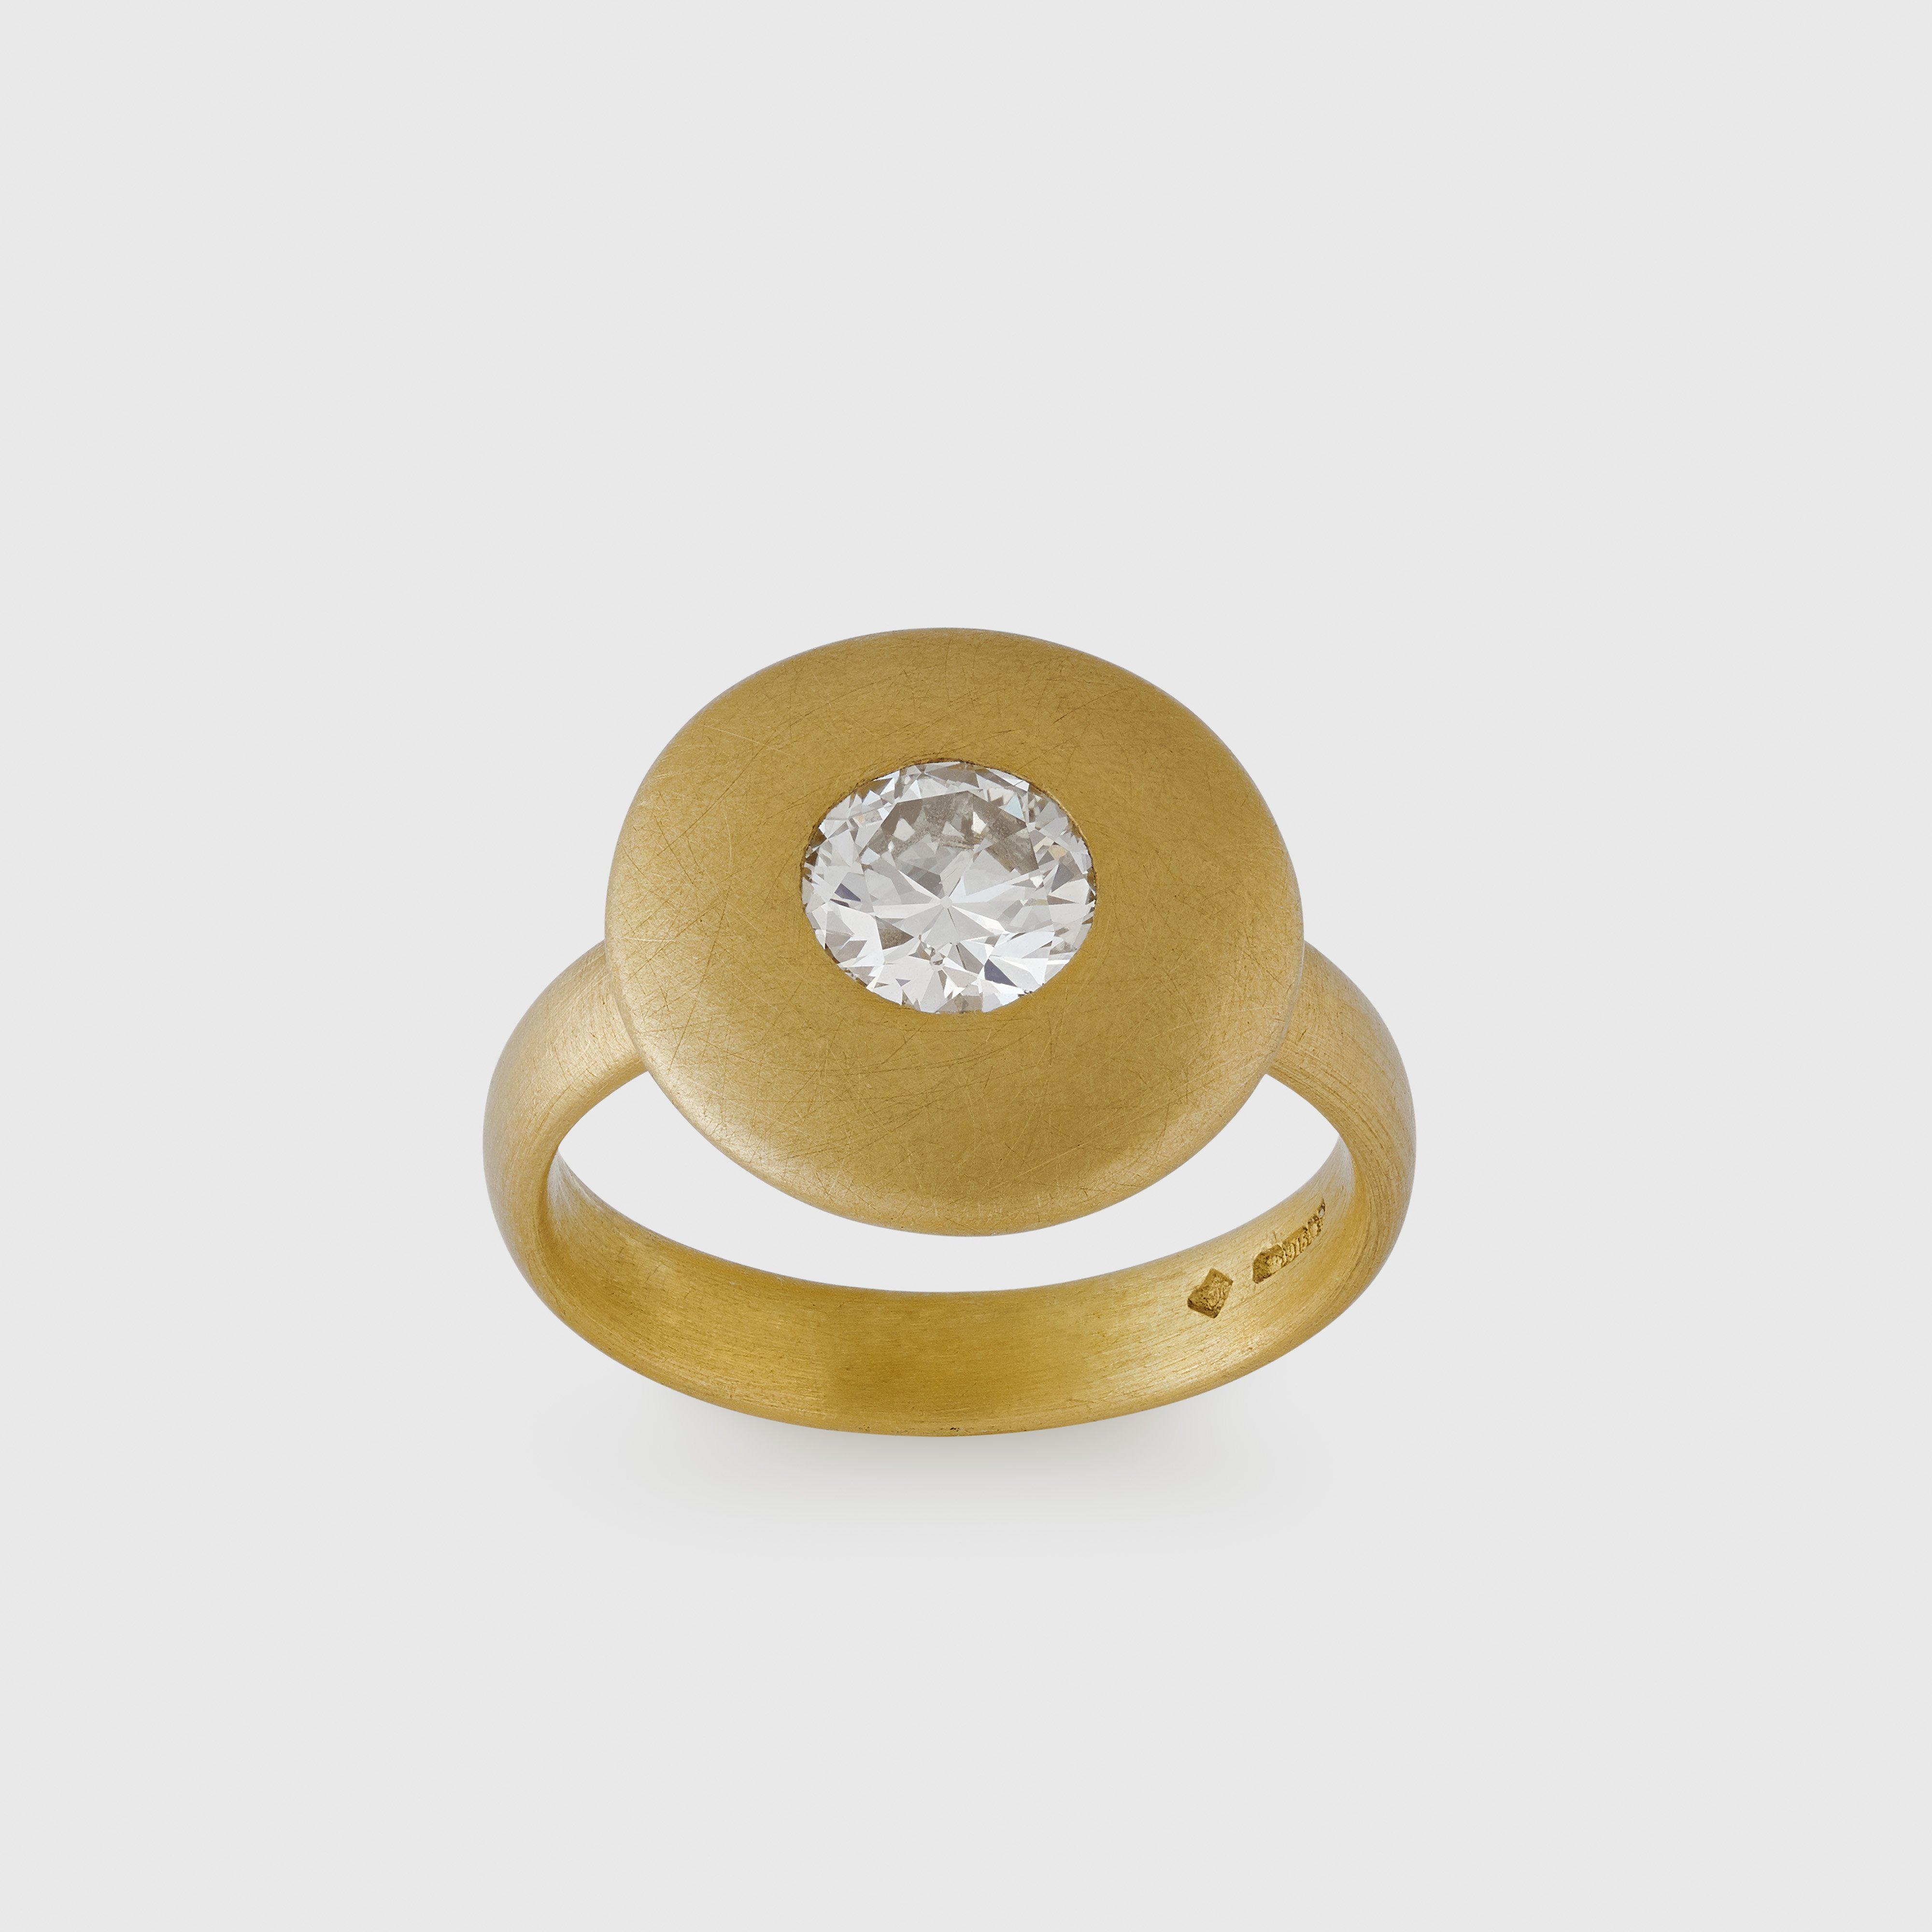 Cadby & Co Antique Brilliant Diamond Ring by CADBY&CO